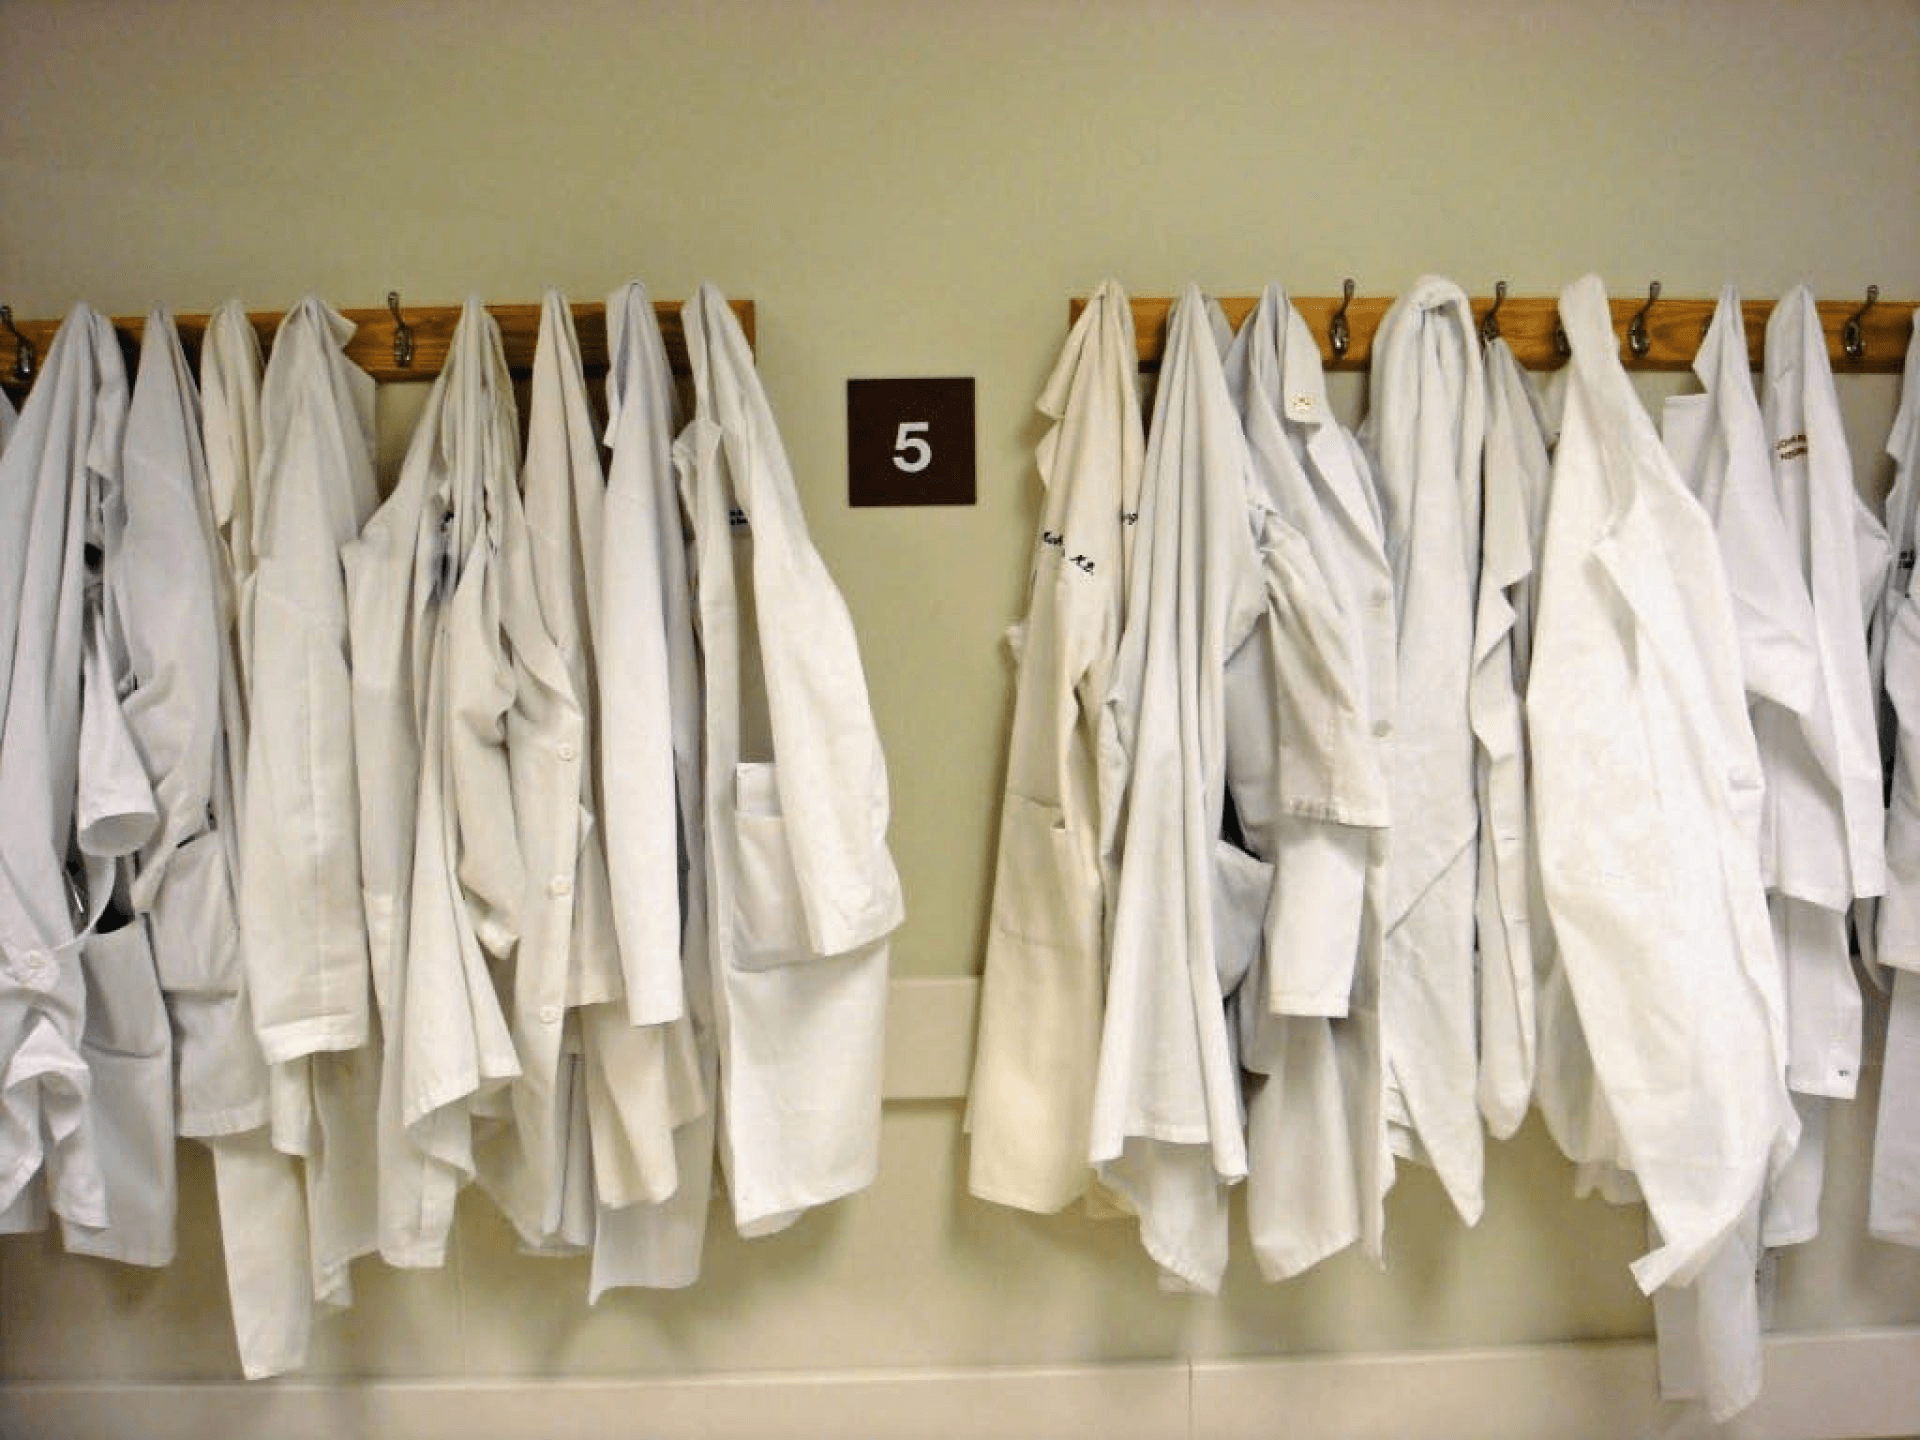 Mancano medici e infermieri: una sfilza di camici appesi